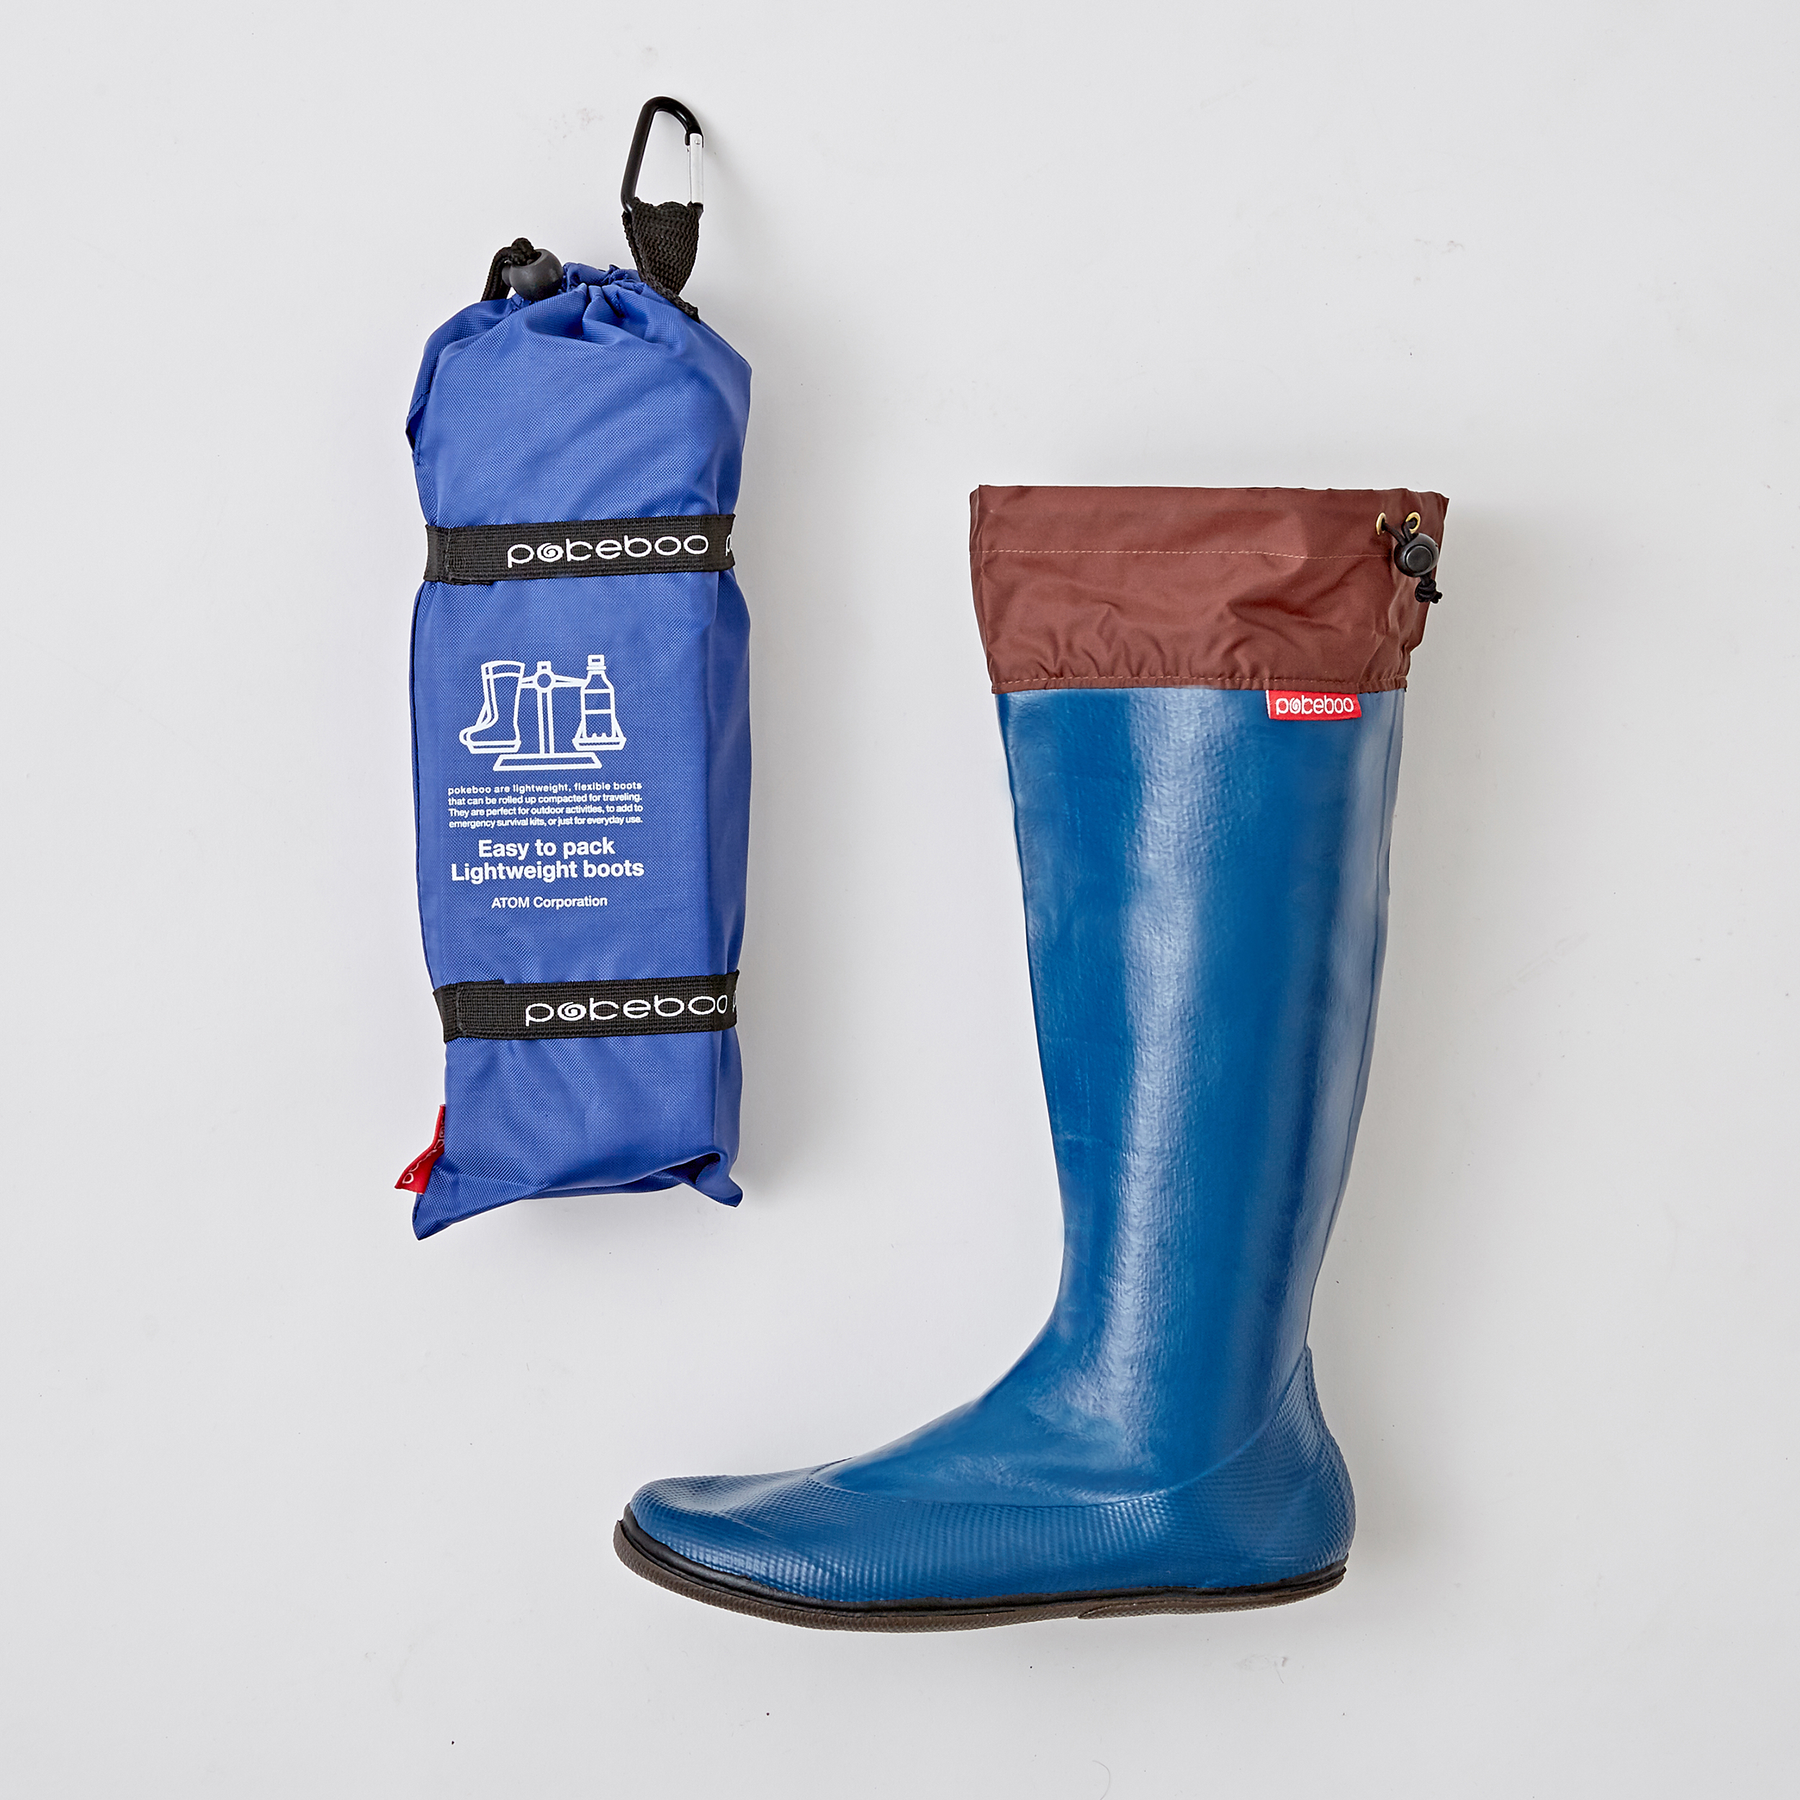 groei voor Hopelijk AMEICO - Official US Distributor of Pokeboo - Packable Rubber Rain Boots -  Royal Blue